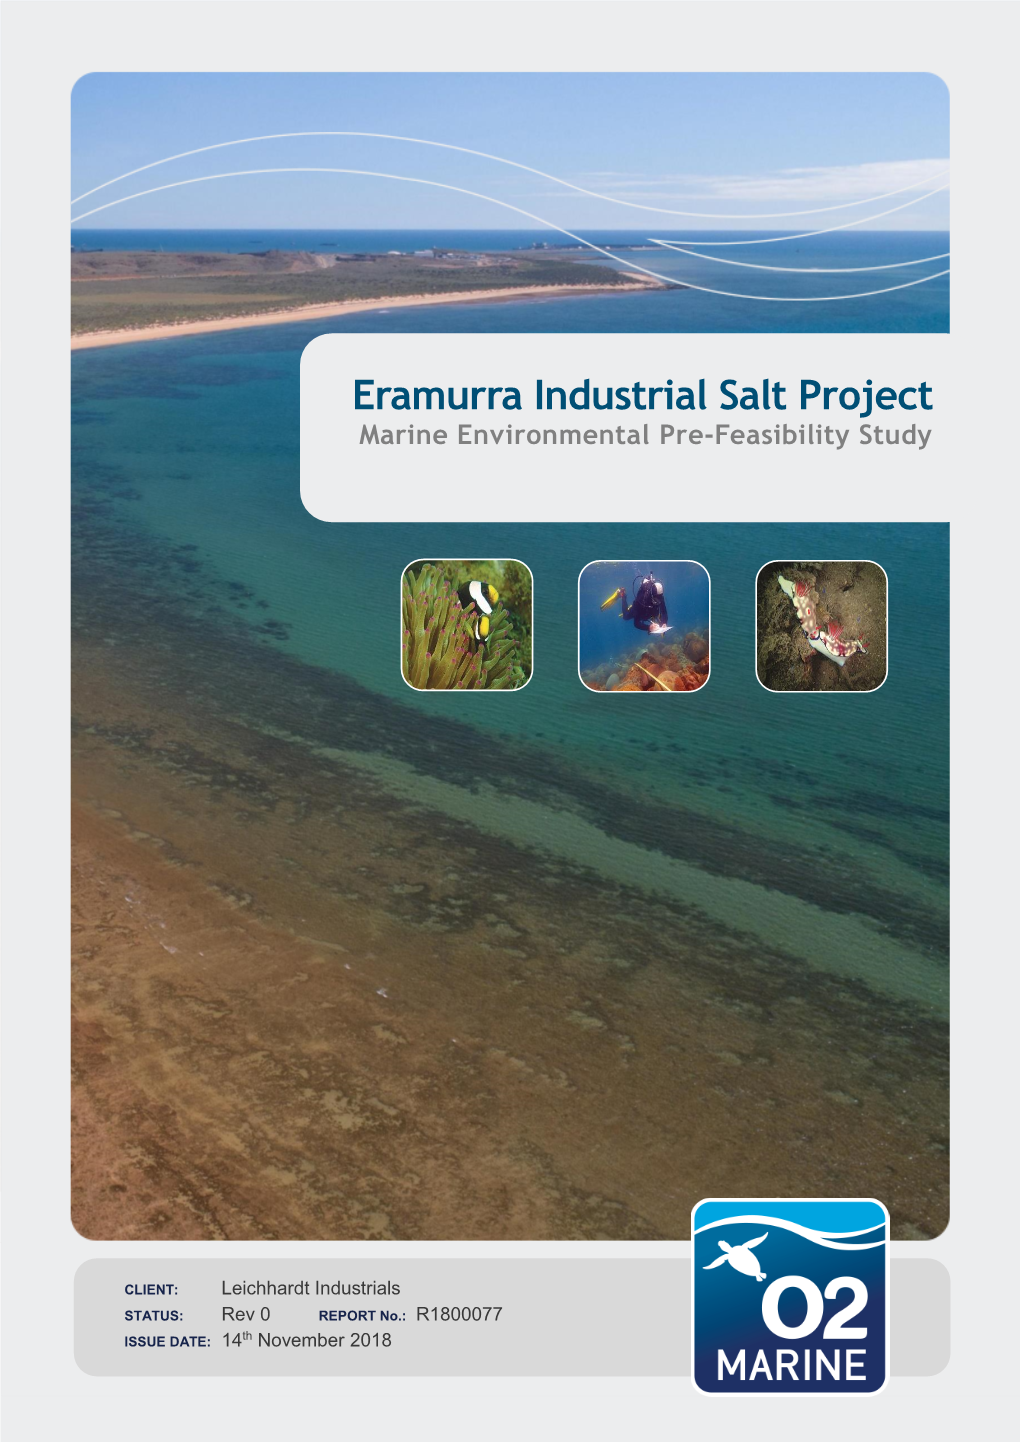 Eramurra Industrial Salt Project Marine Environmental Pre-Feasibility Study